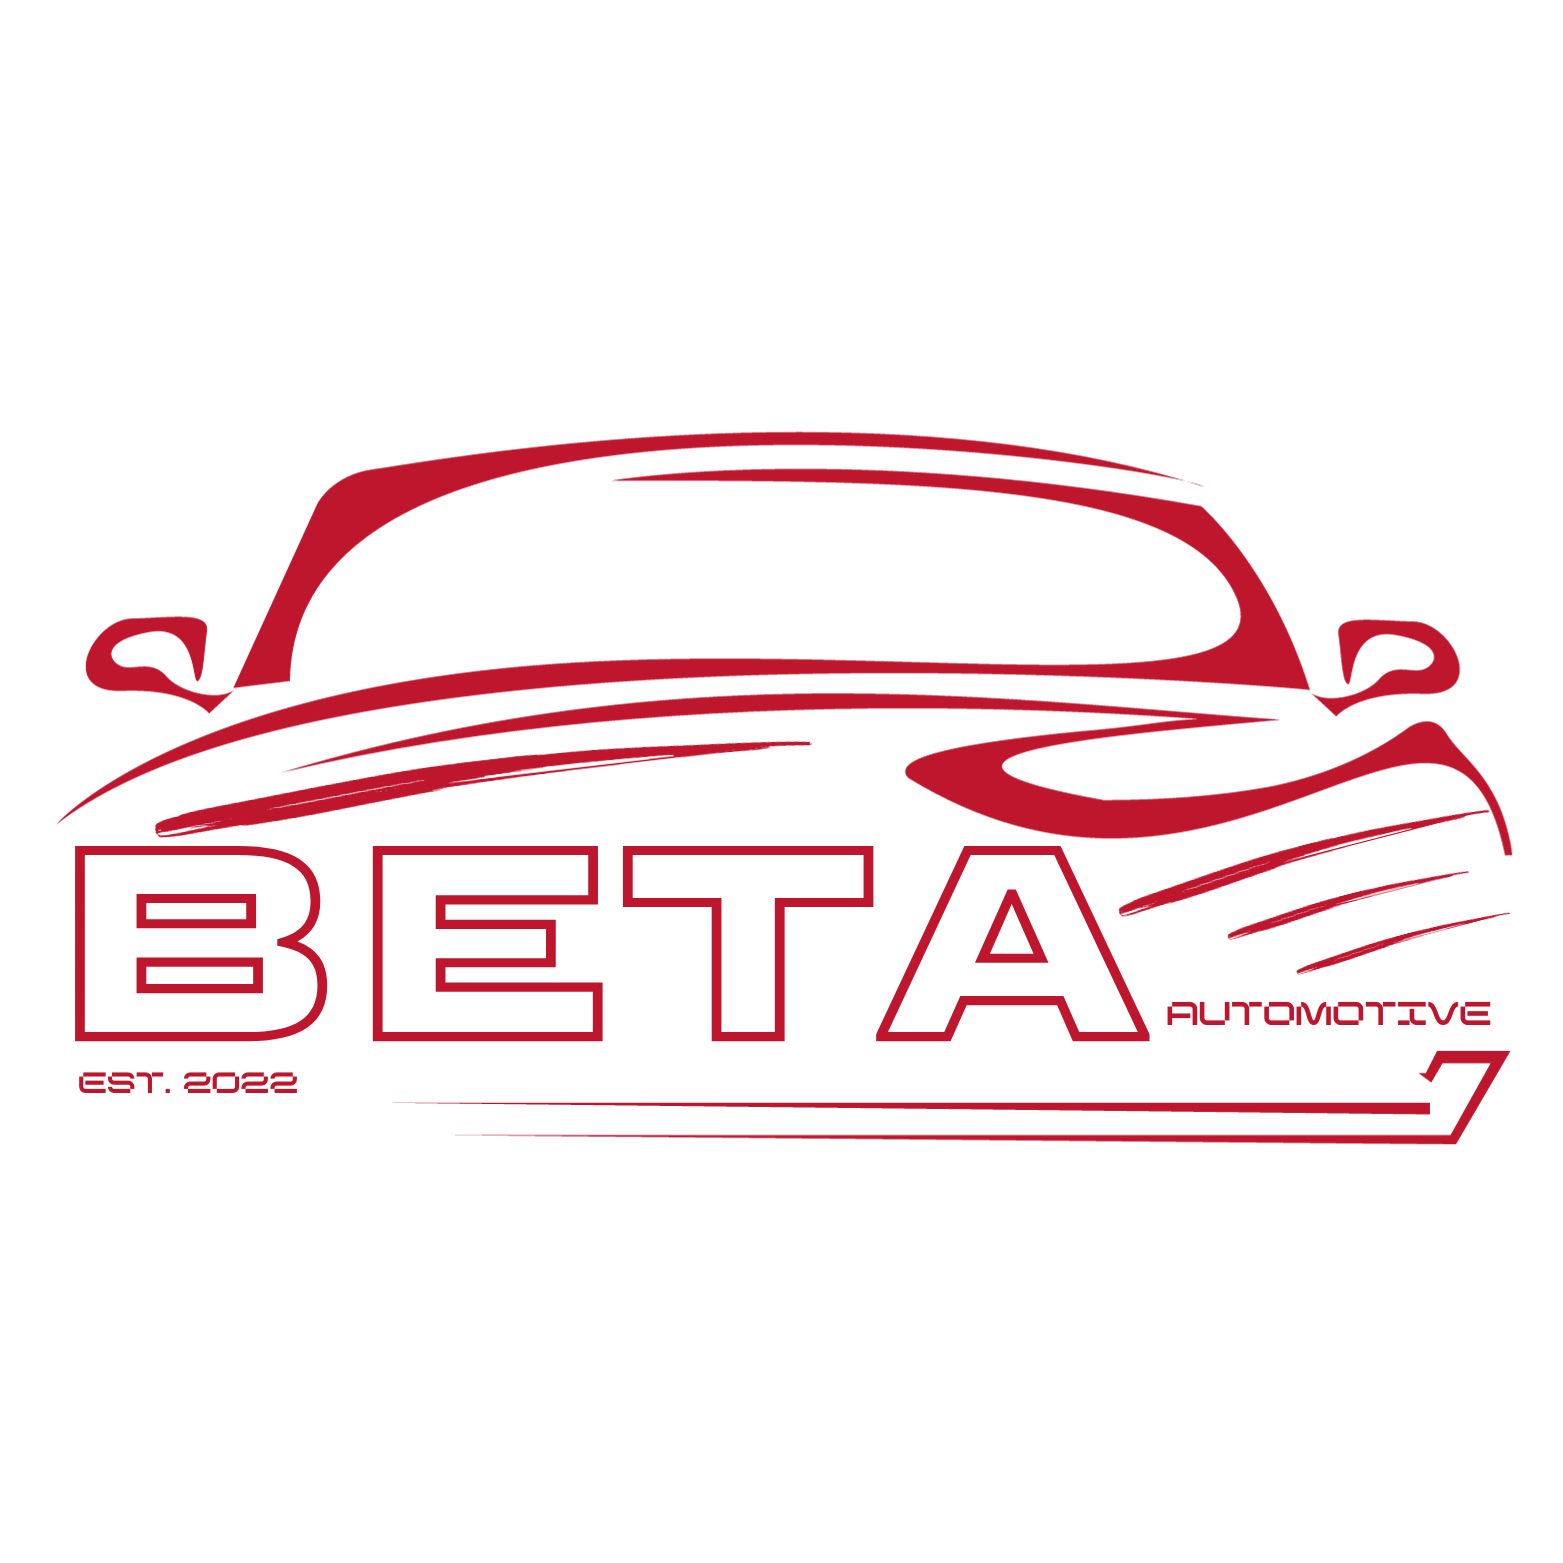 Beta Automtoive